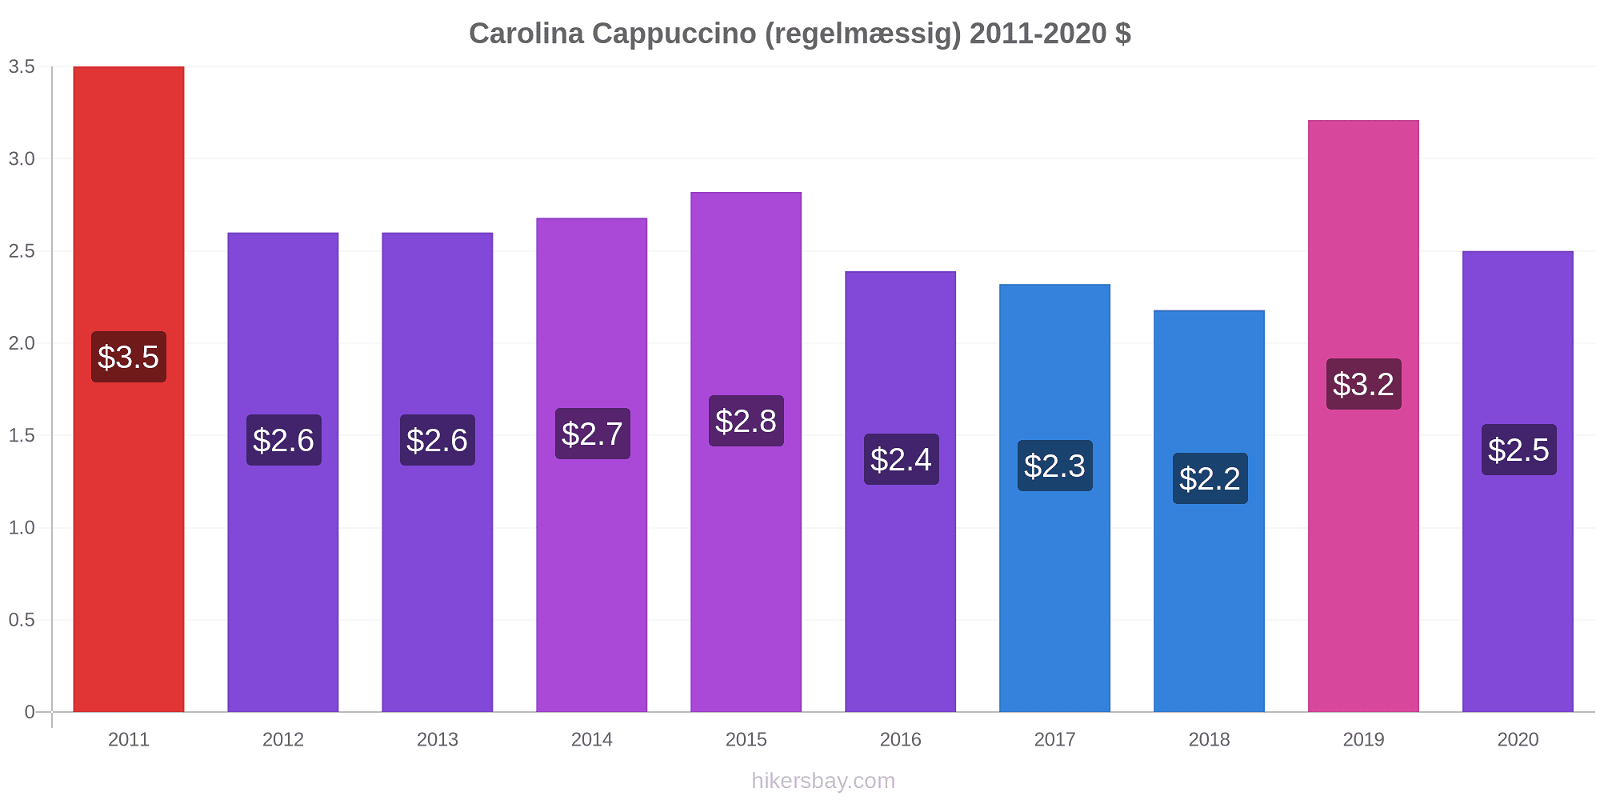 Carolina prisændringer Cappuccino (regelmæssig) hikersbay.com